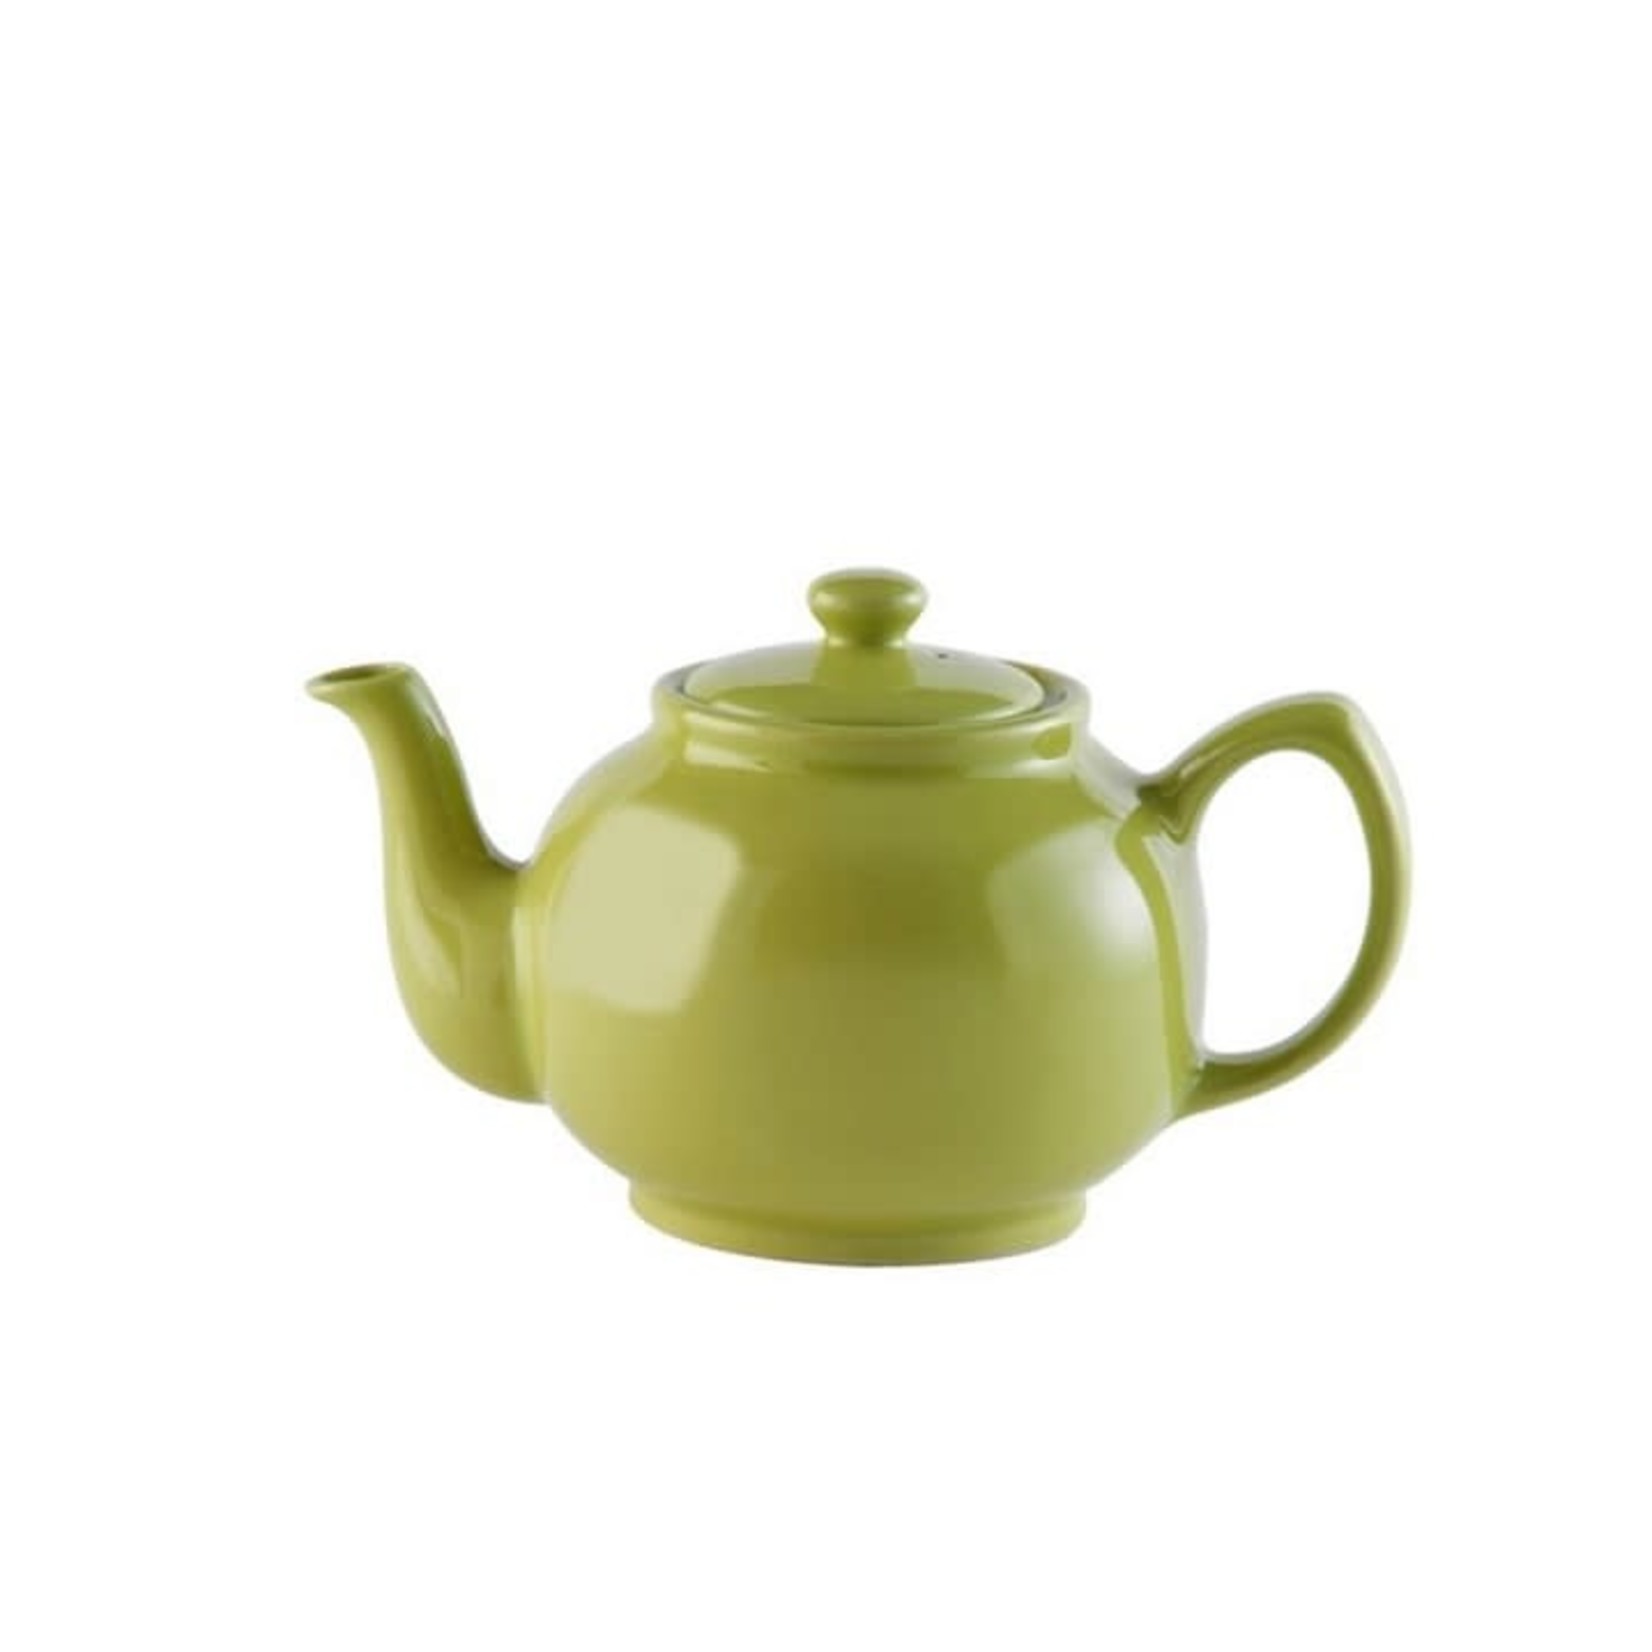 PRICE & KENSINGTON PRICE & KENSINGTON Teapot 6 Cup - Olive Green